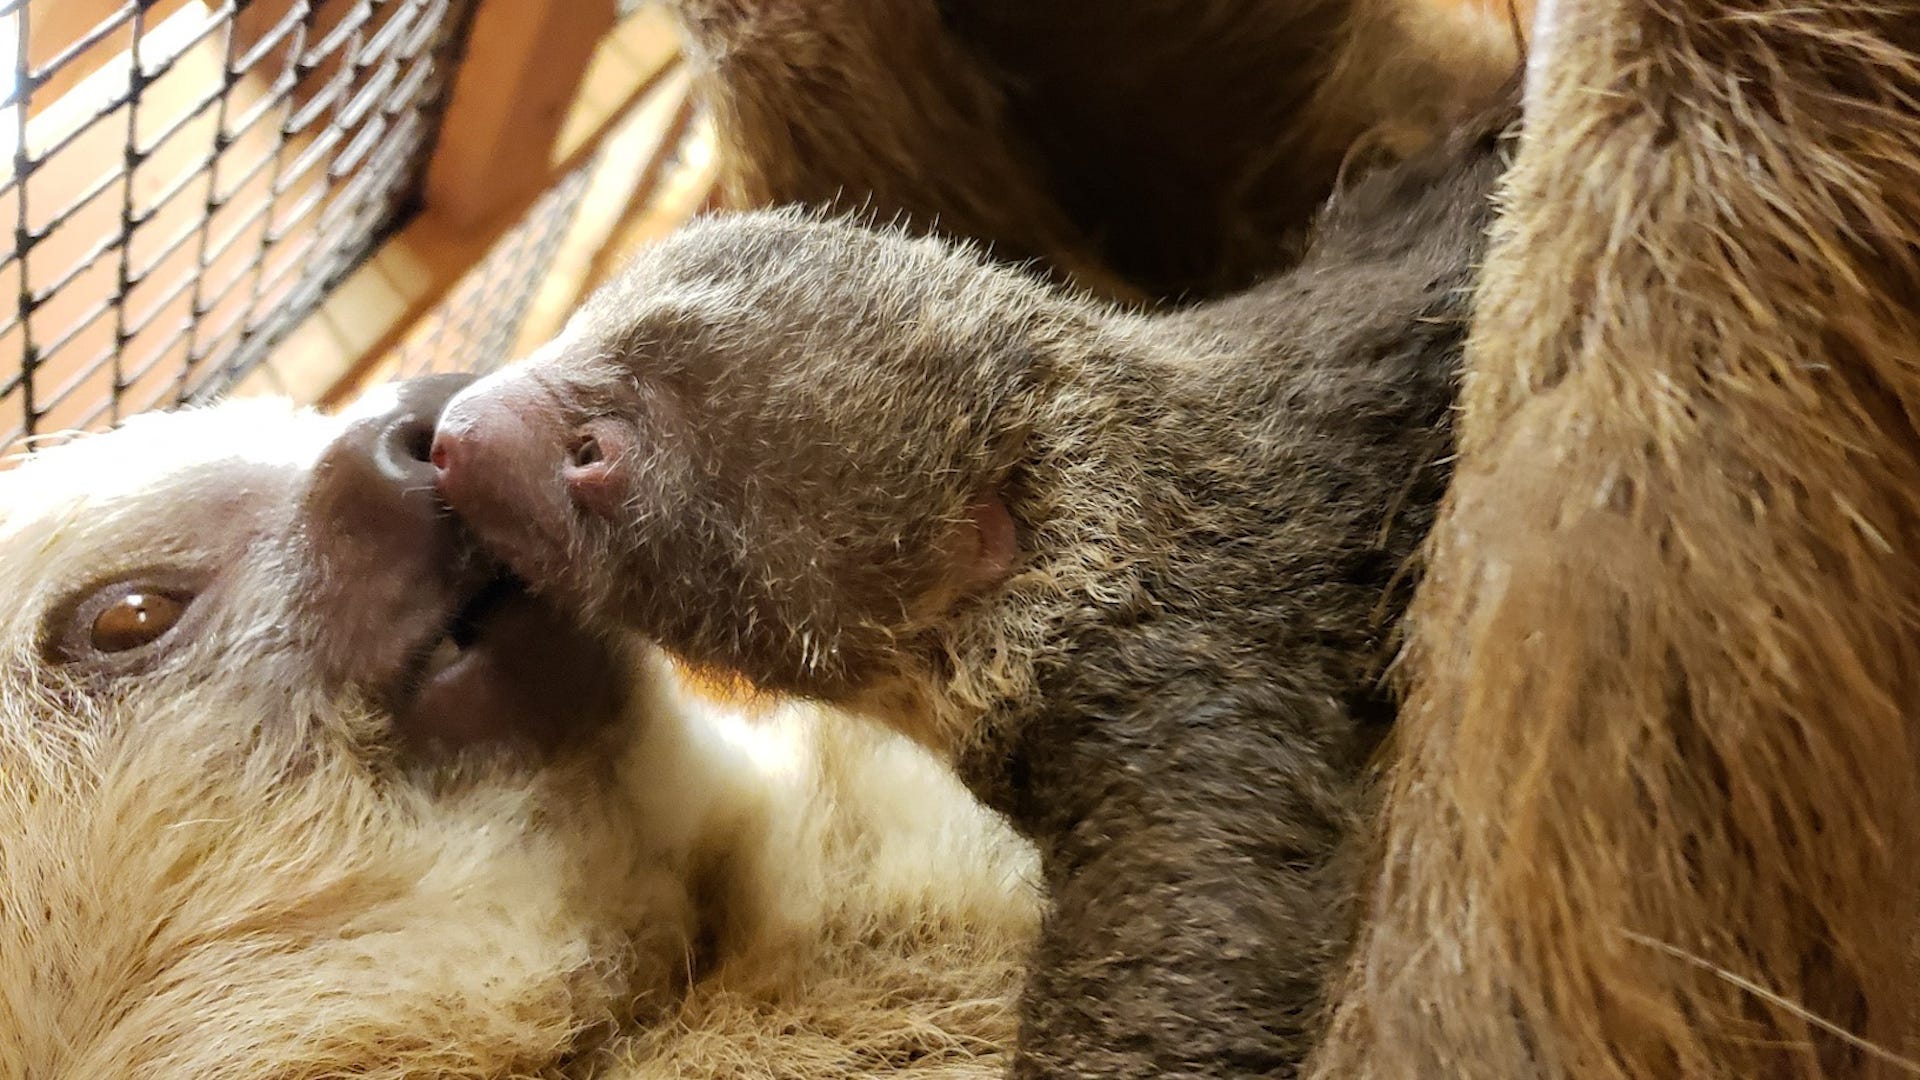 Newborn Sloth Love to Cuddle With Mom